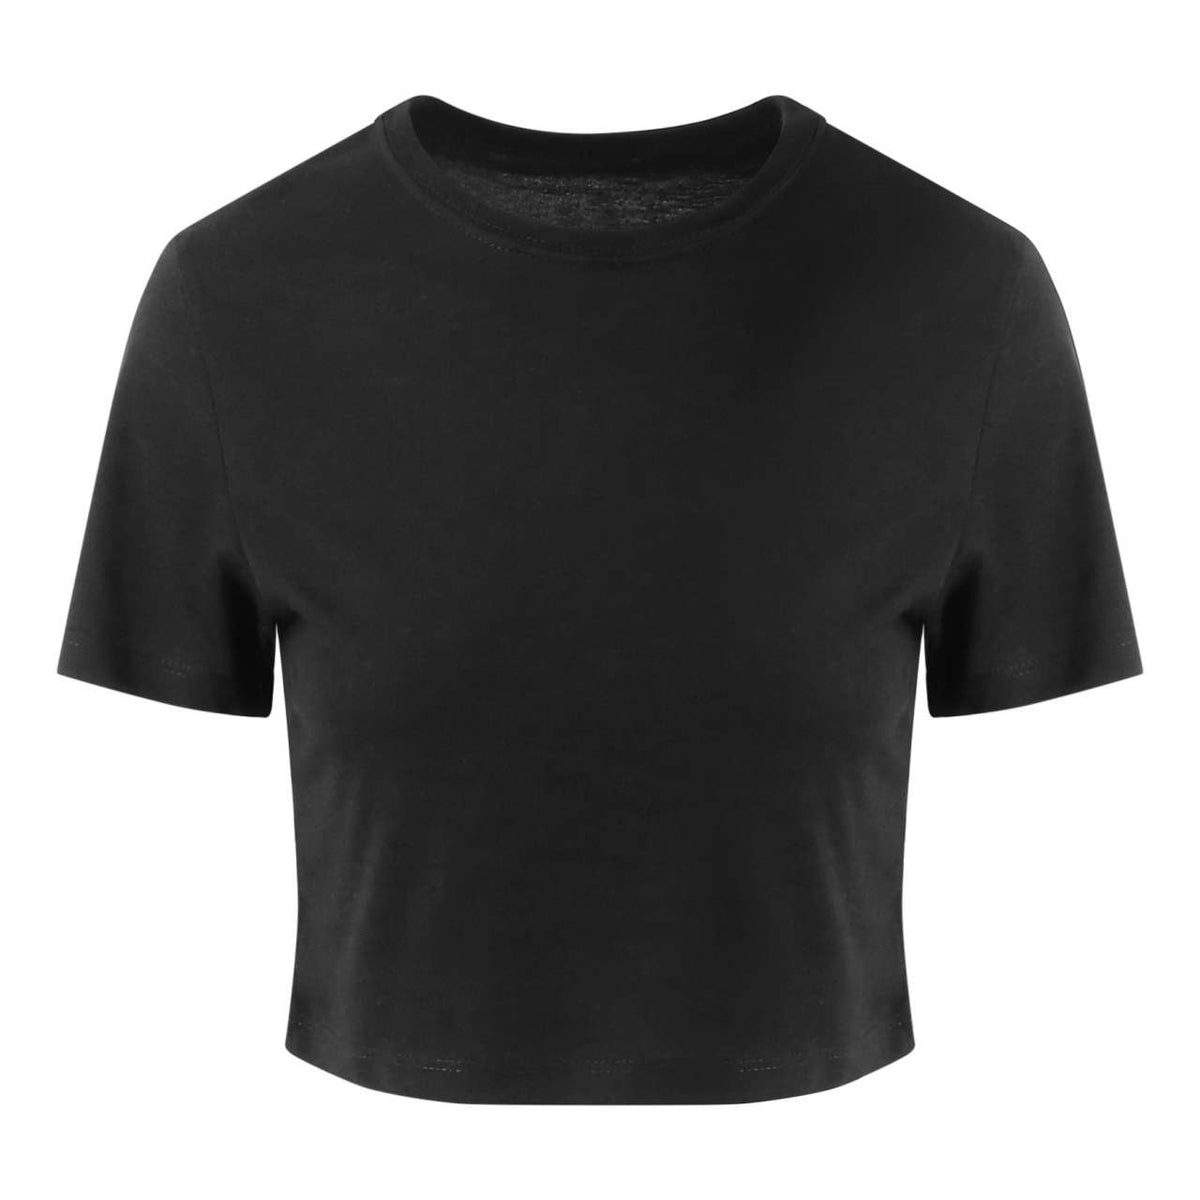 Just Ts Damen Cropped T-Shirt Shirt Slim Fit Baumwolle Oberteil